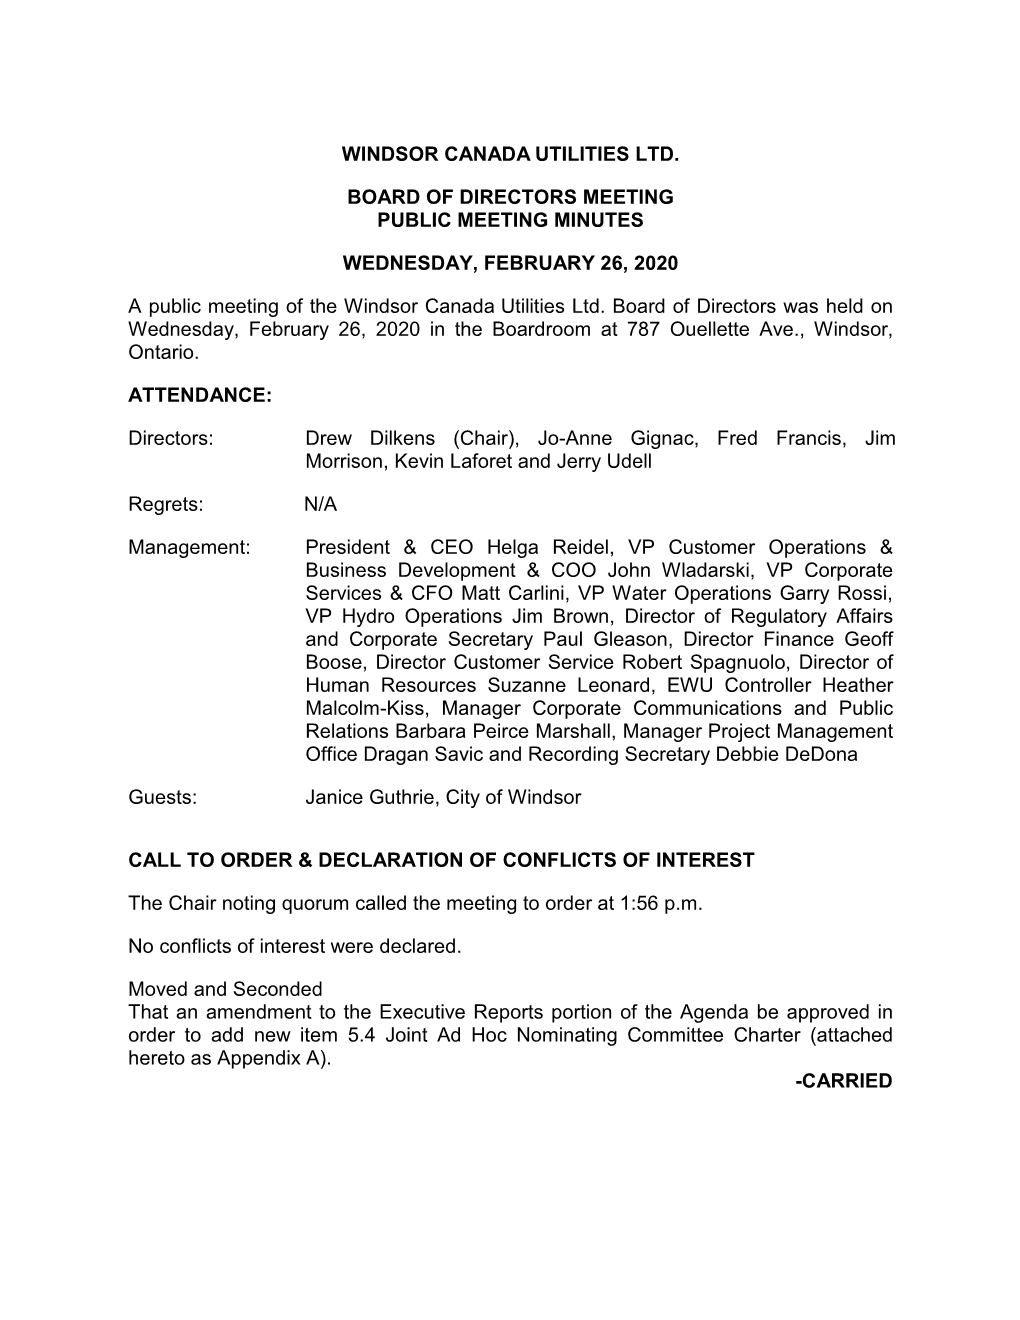 Windsor Canada Utilities Ltd. Public Meeting Minutes February 26, 2020